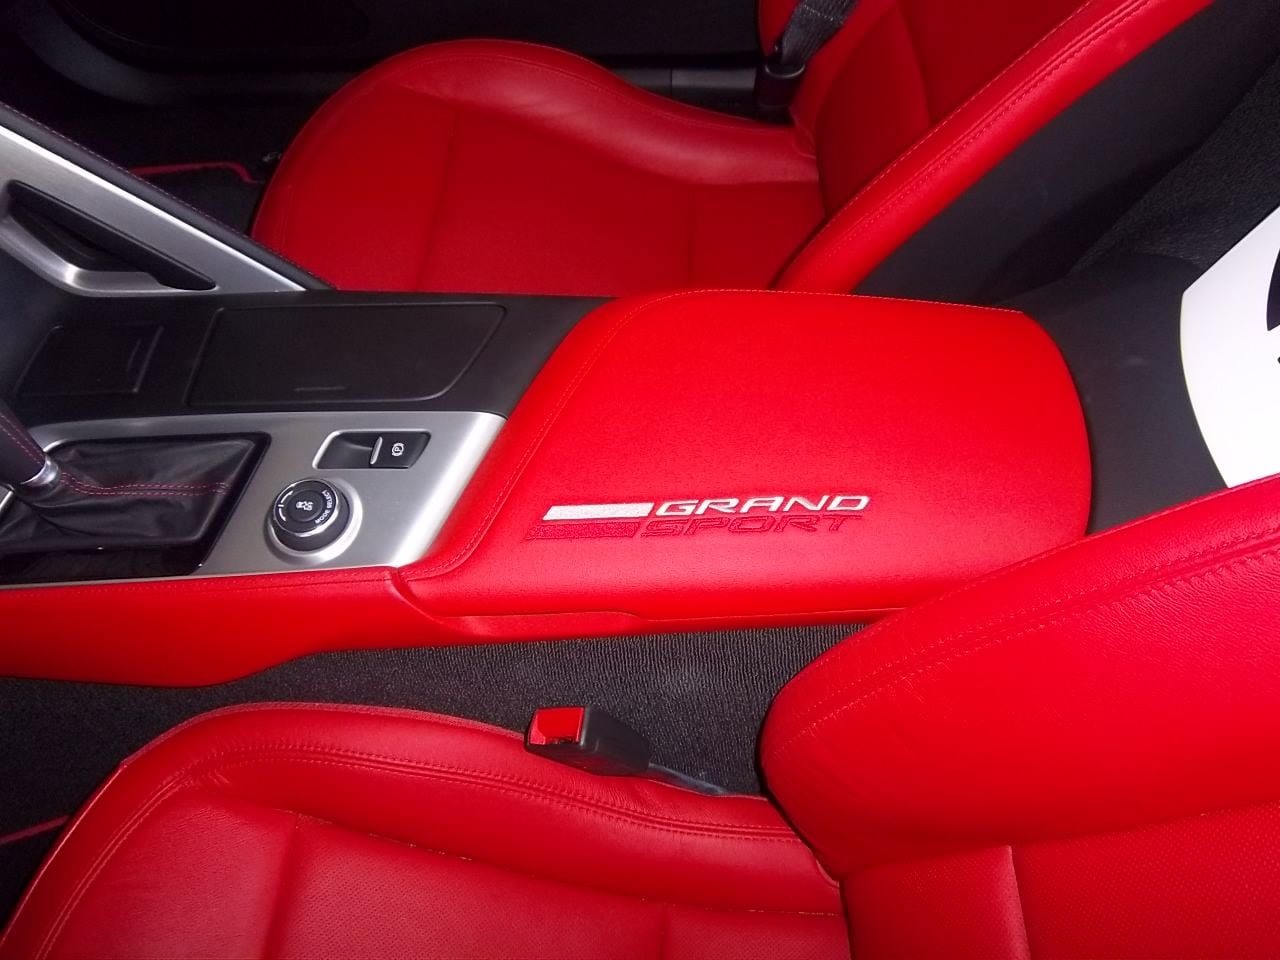 2017 C7 Corvette Console Lid Mulan Leather Grand Sport Logo Red 84179899